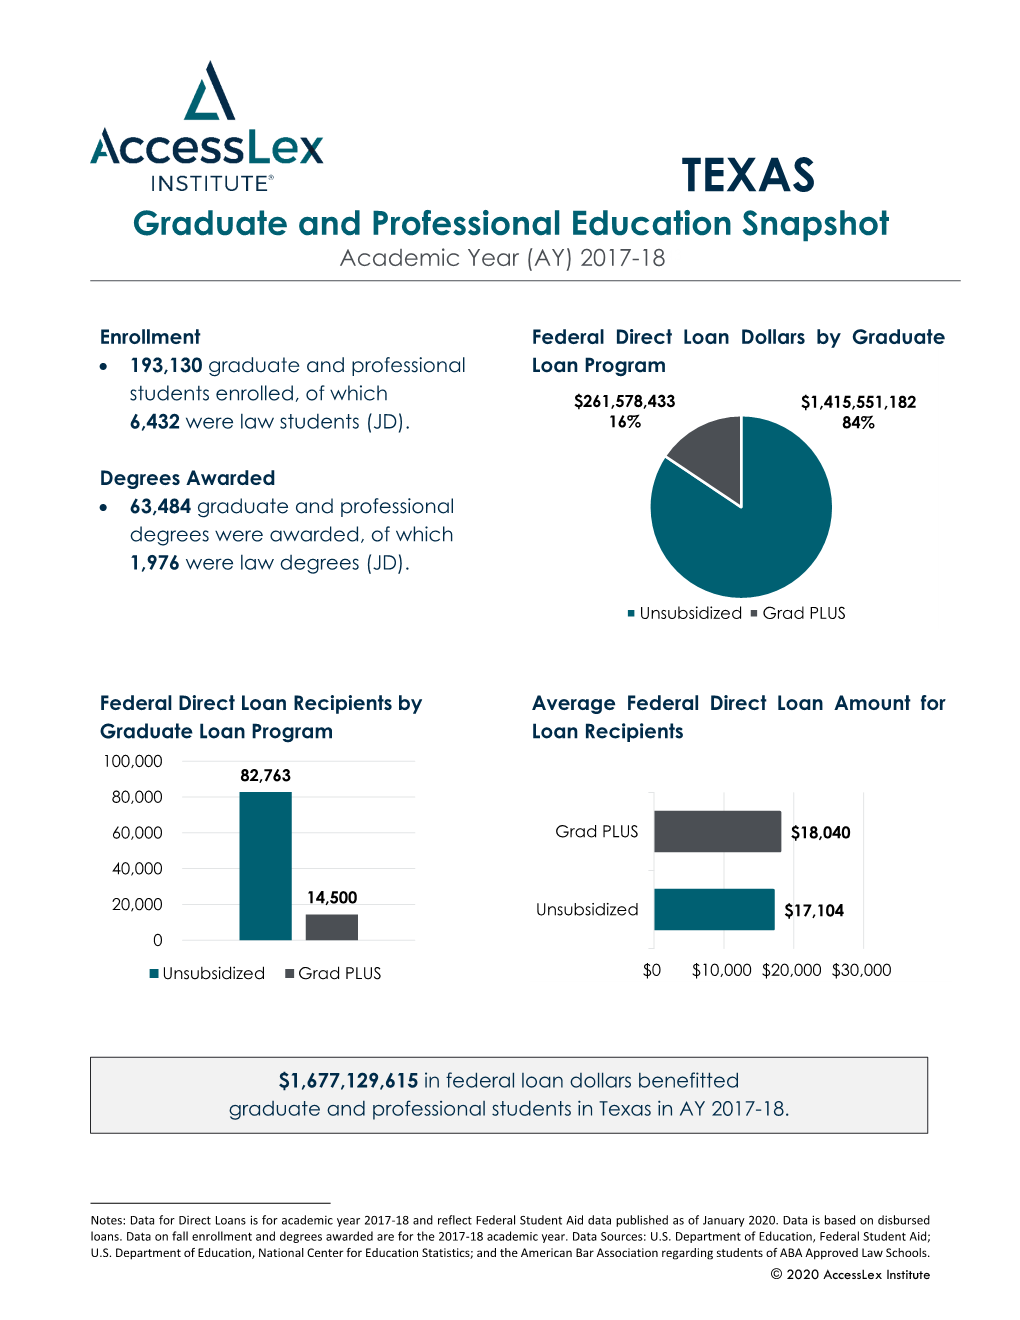 TEXAS Graduate and Professional Education Snapshot Academic Year (AY) 2017-1843